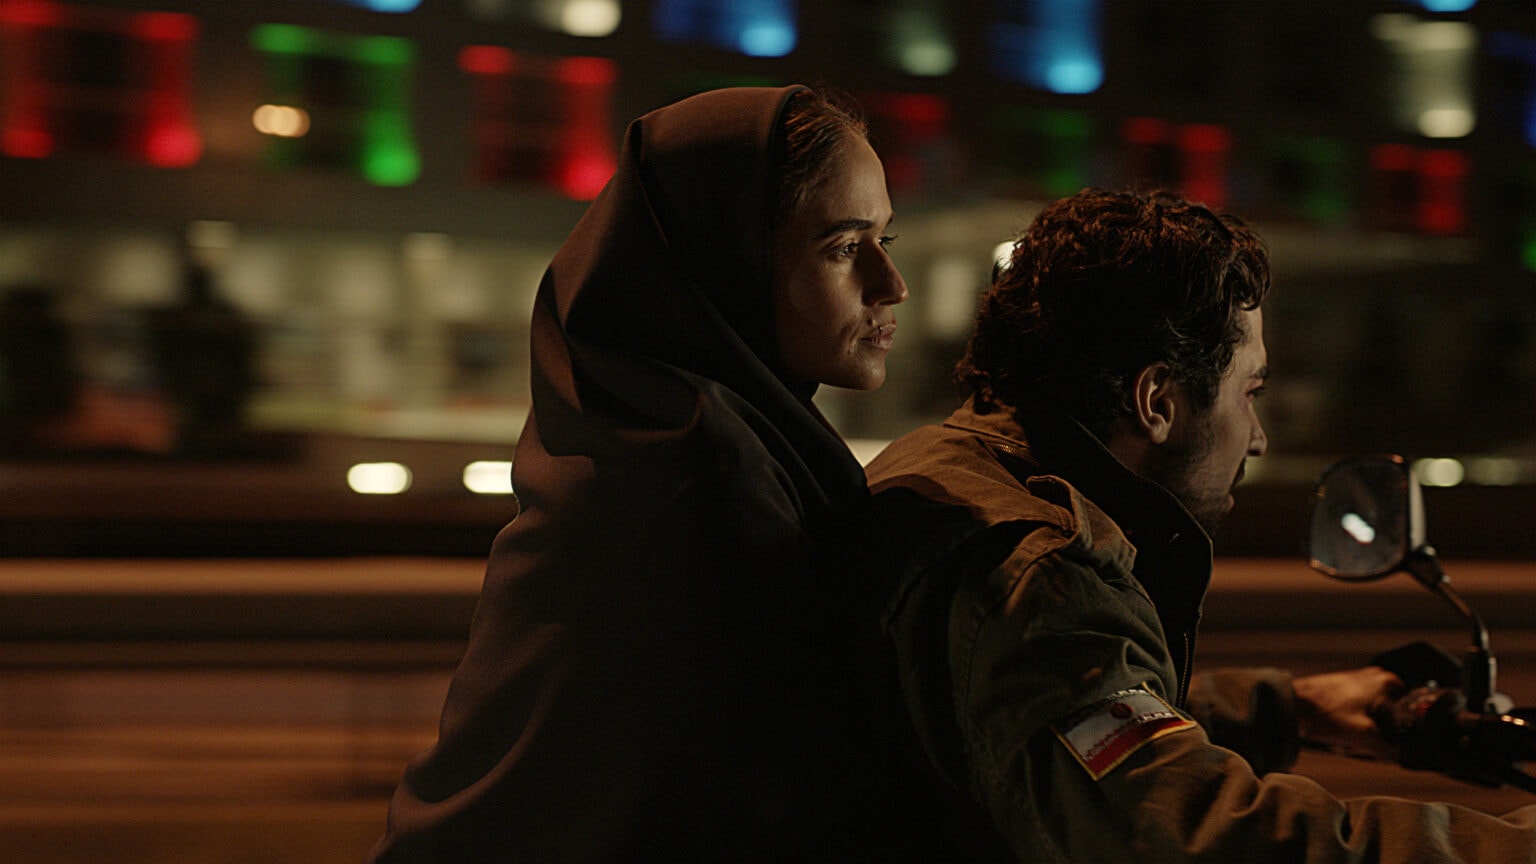 Tehran is a spy thriller starring Israeli actress Niv Sultan.